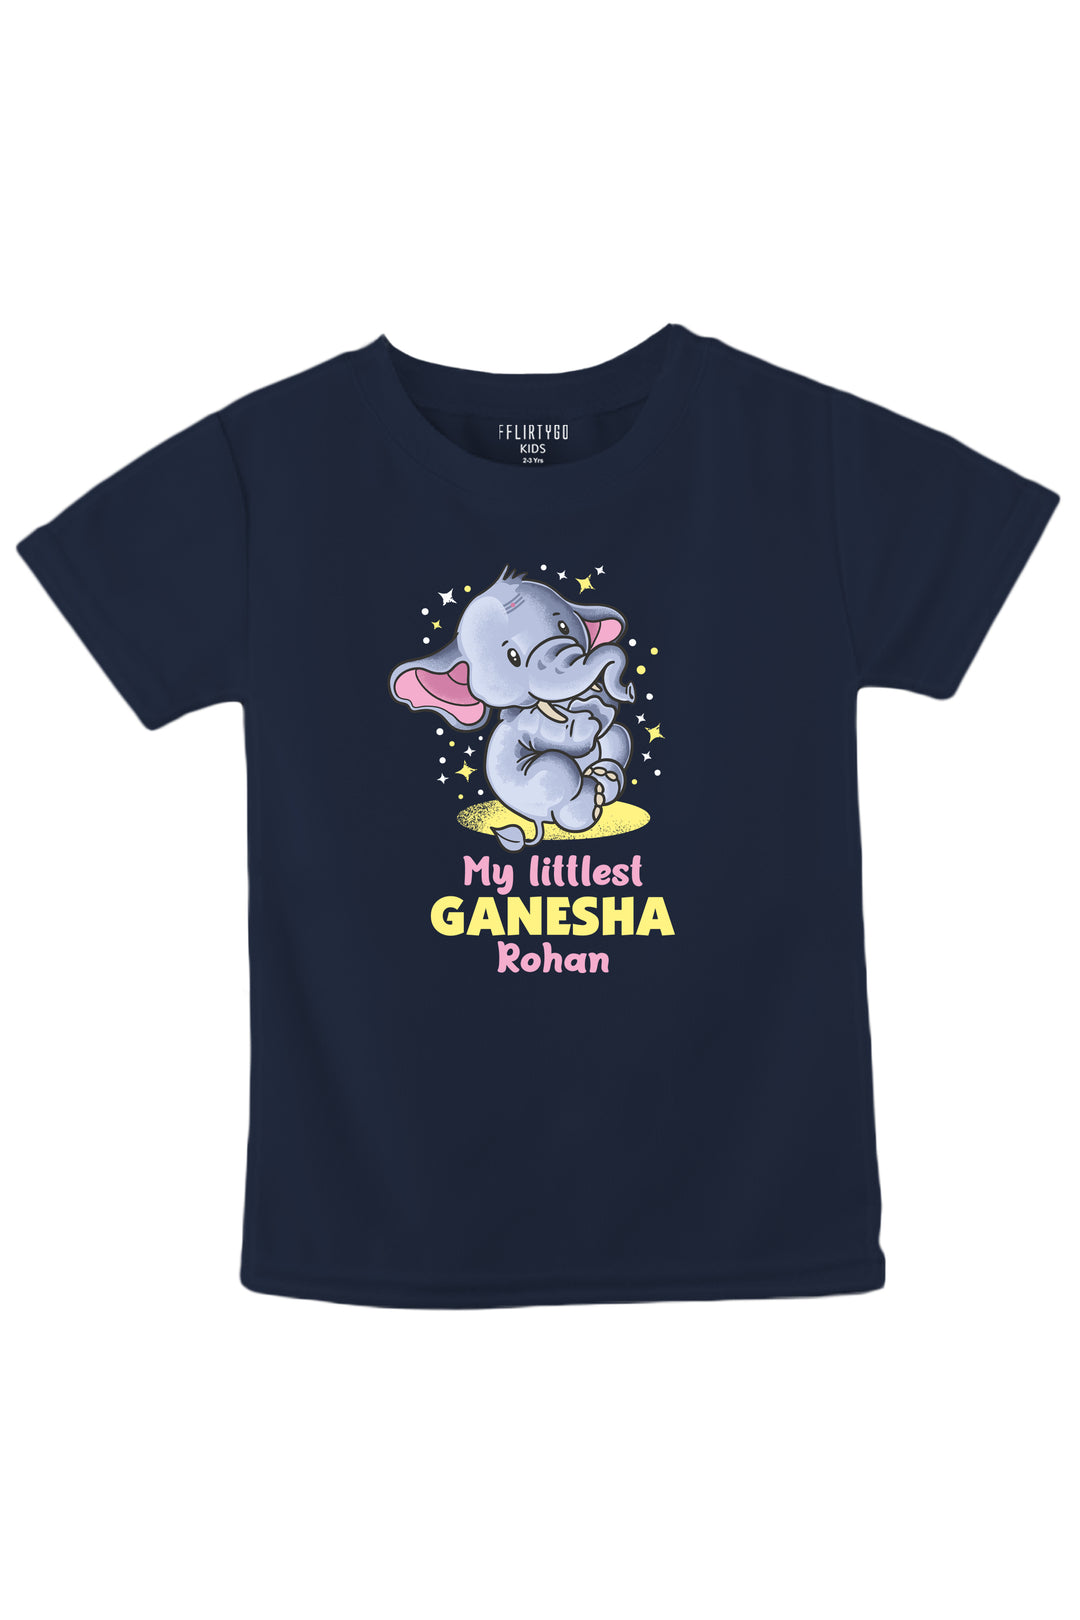 My littlest Ganesha Kids T Shirt w/ Custom Name